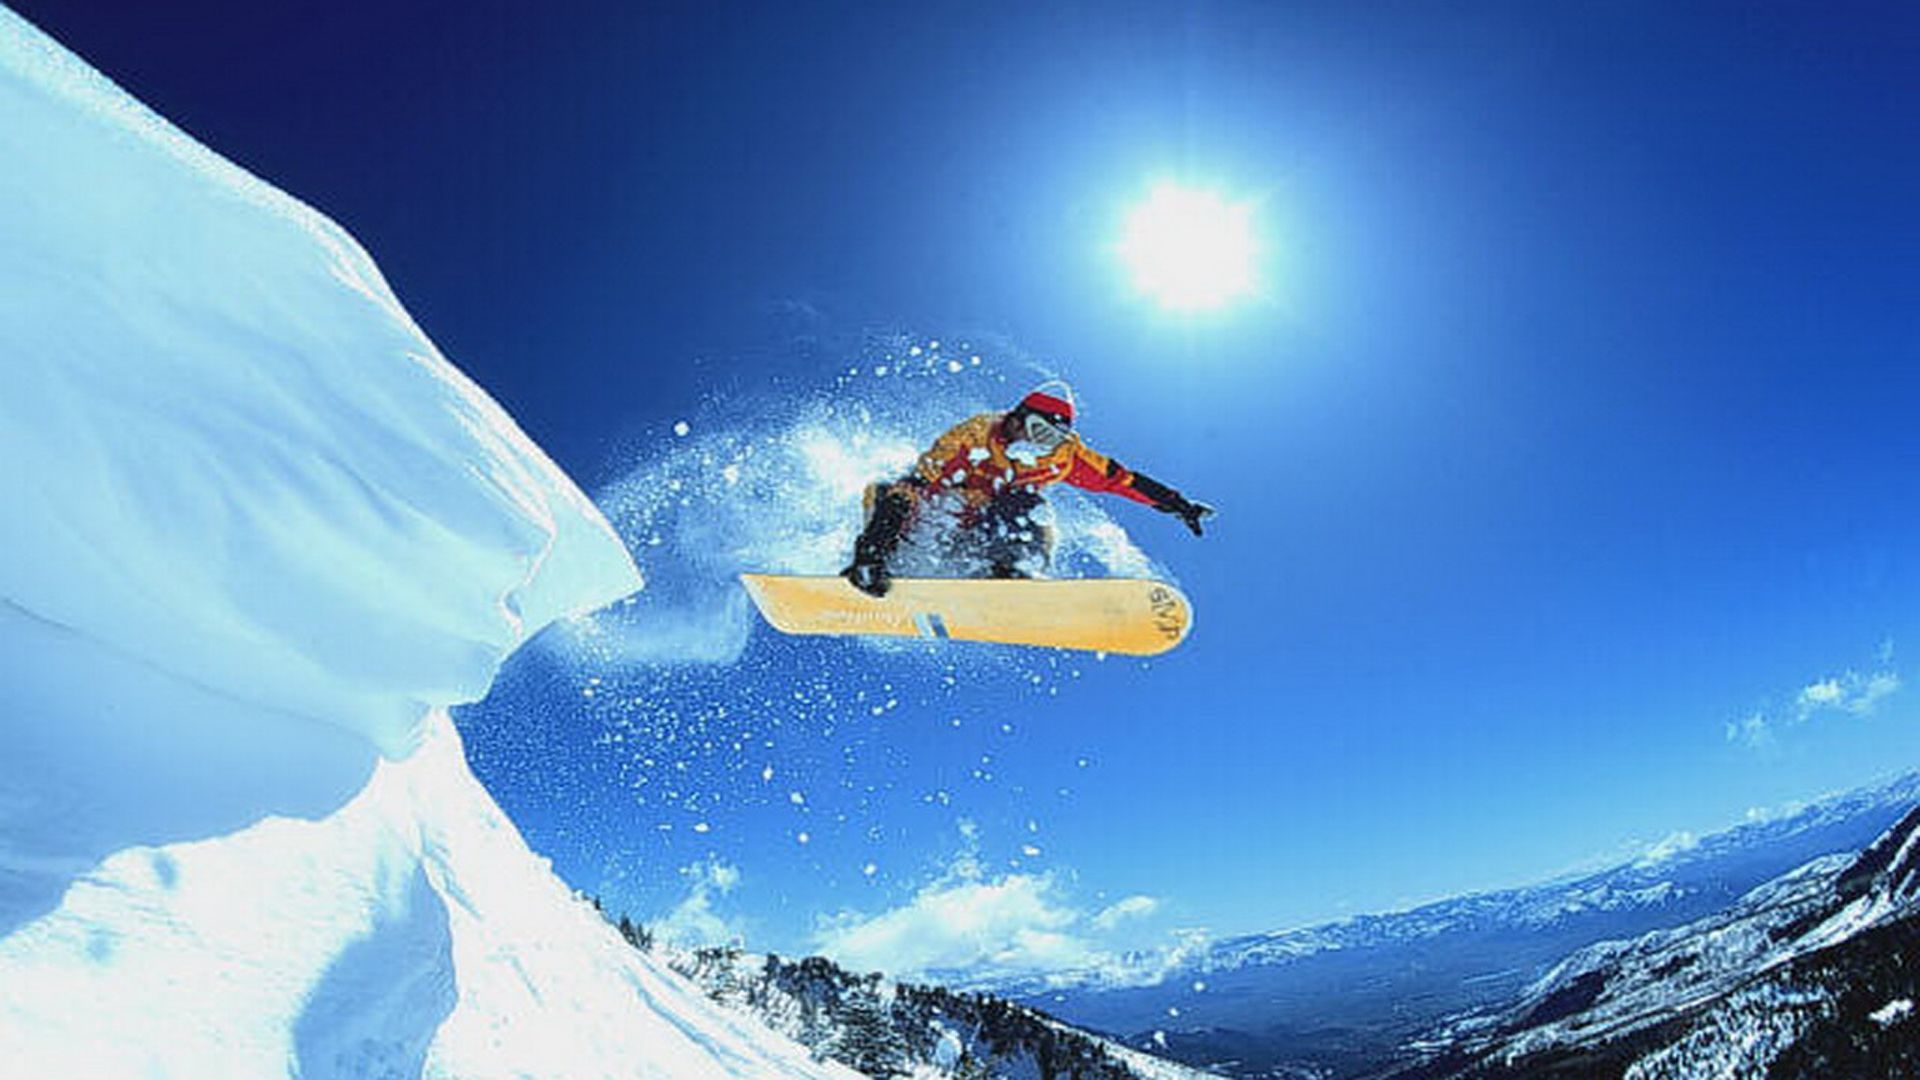 Snowboard wallpaper 161740